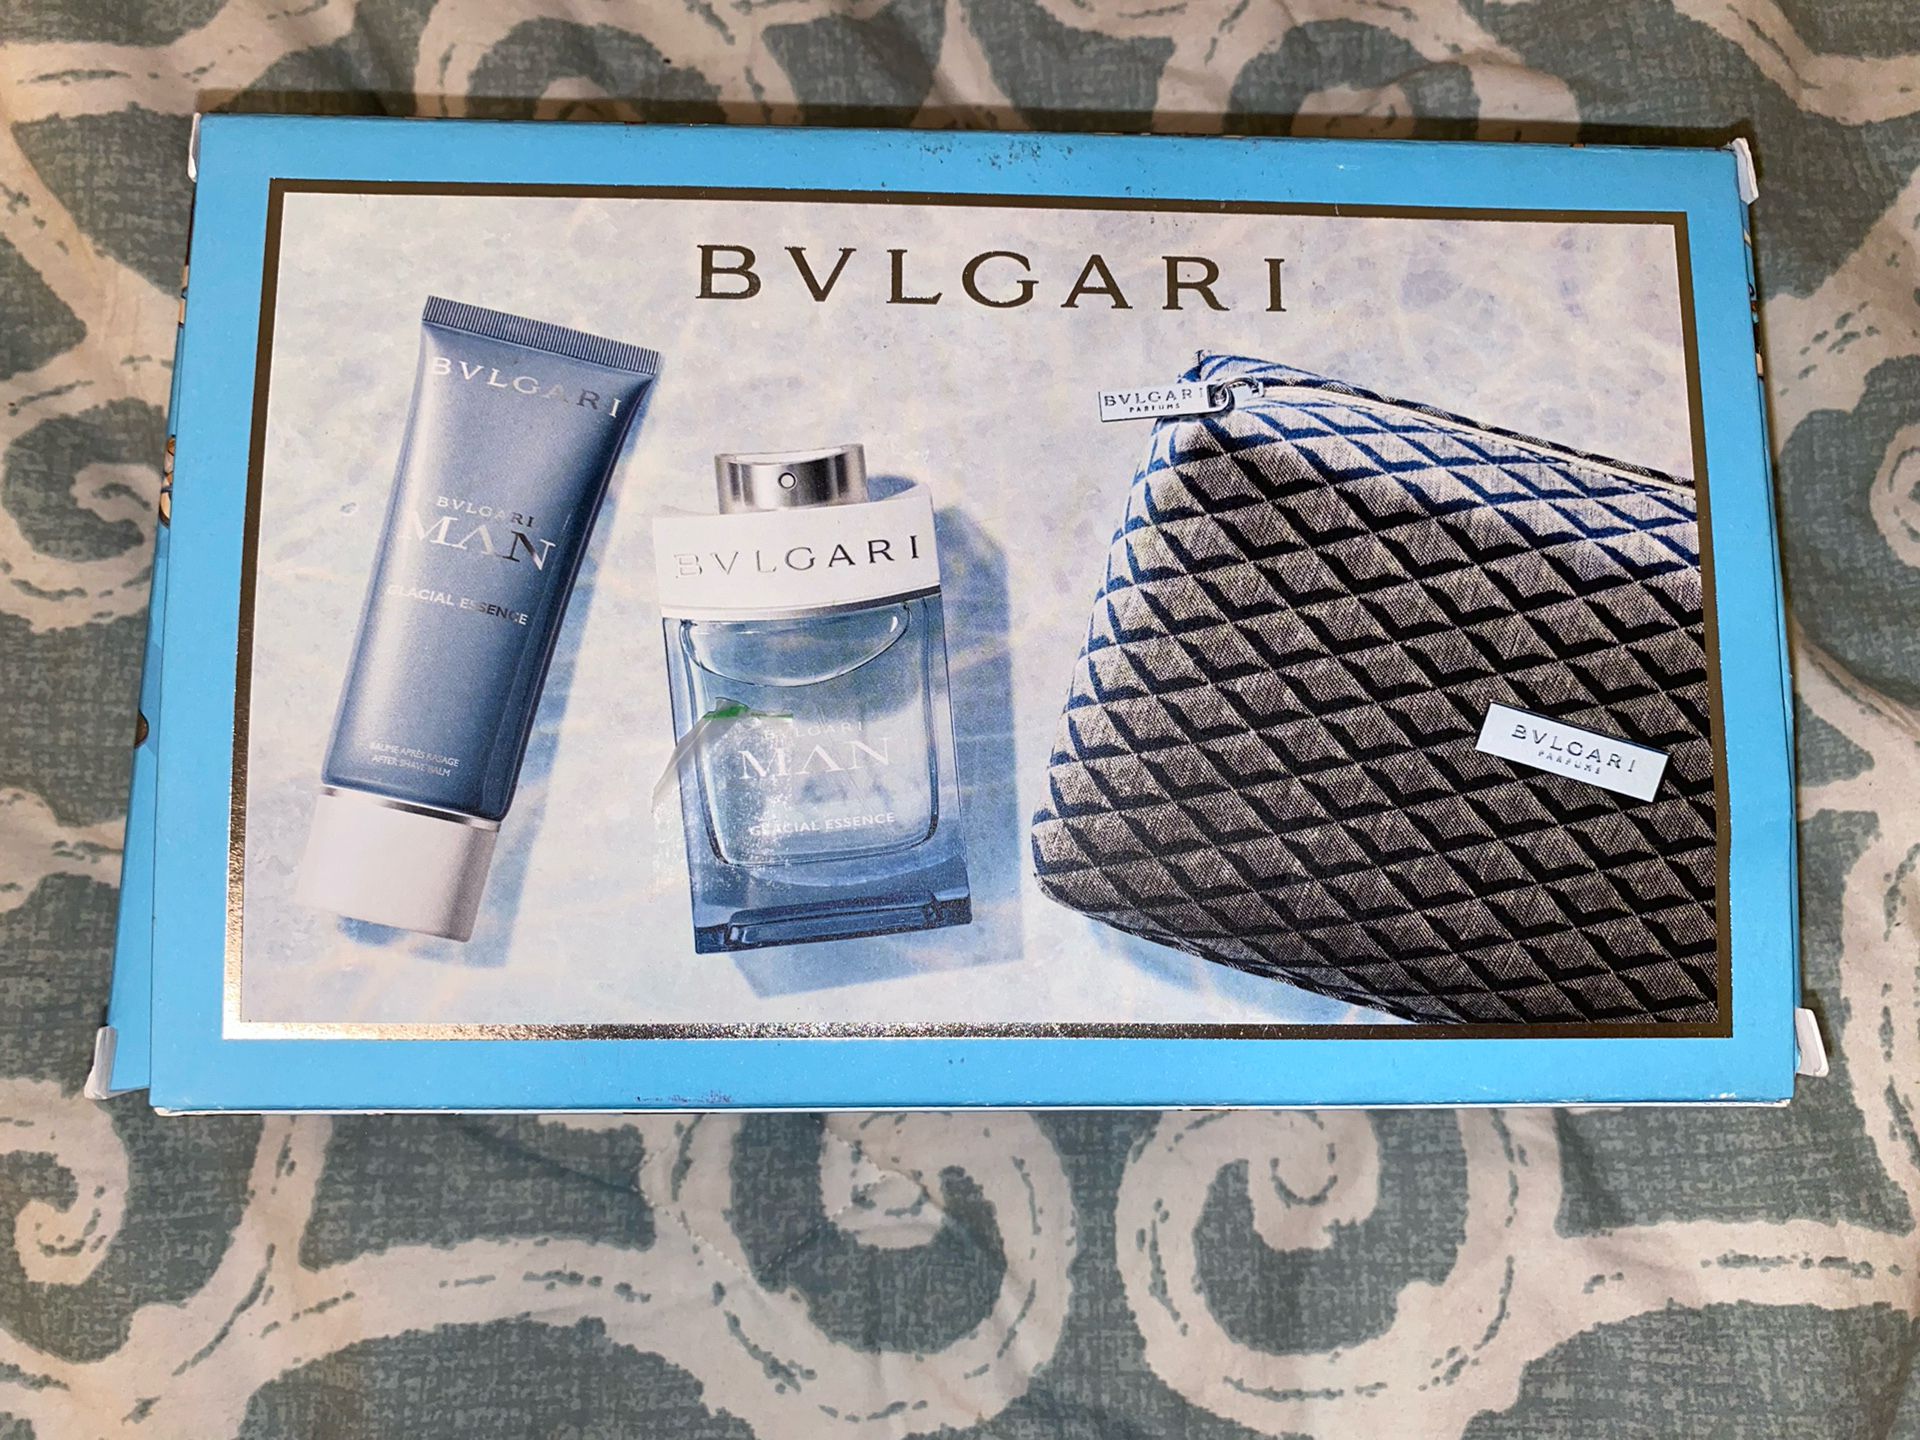 Bvlgari Parfum Glacial Essence Set For Men Bnew